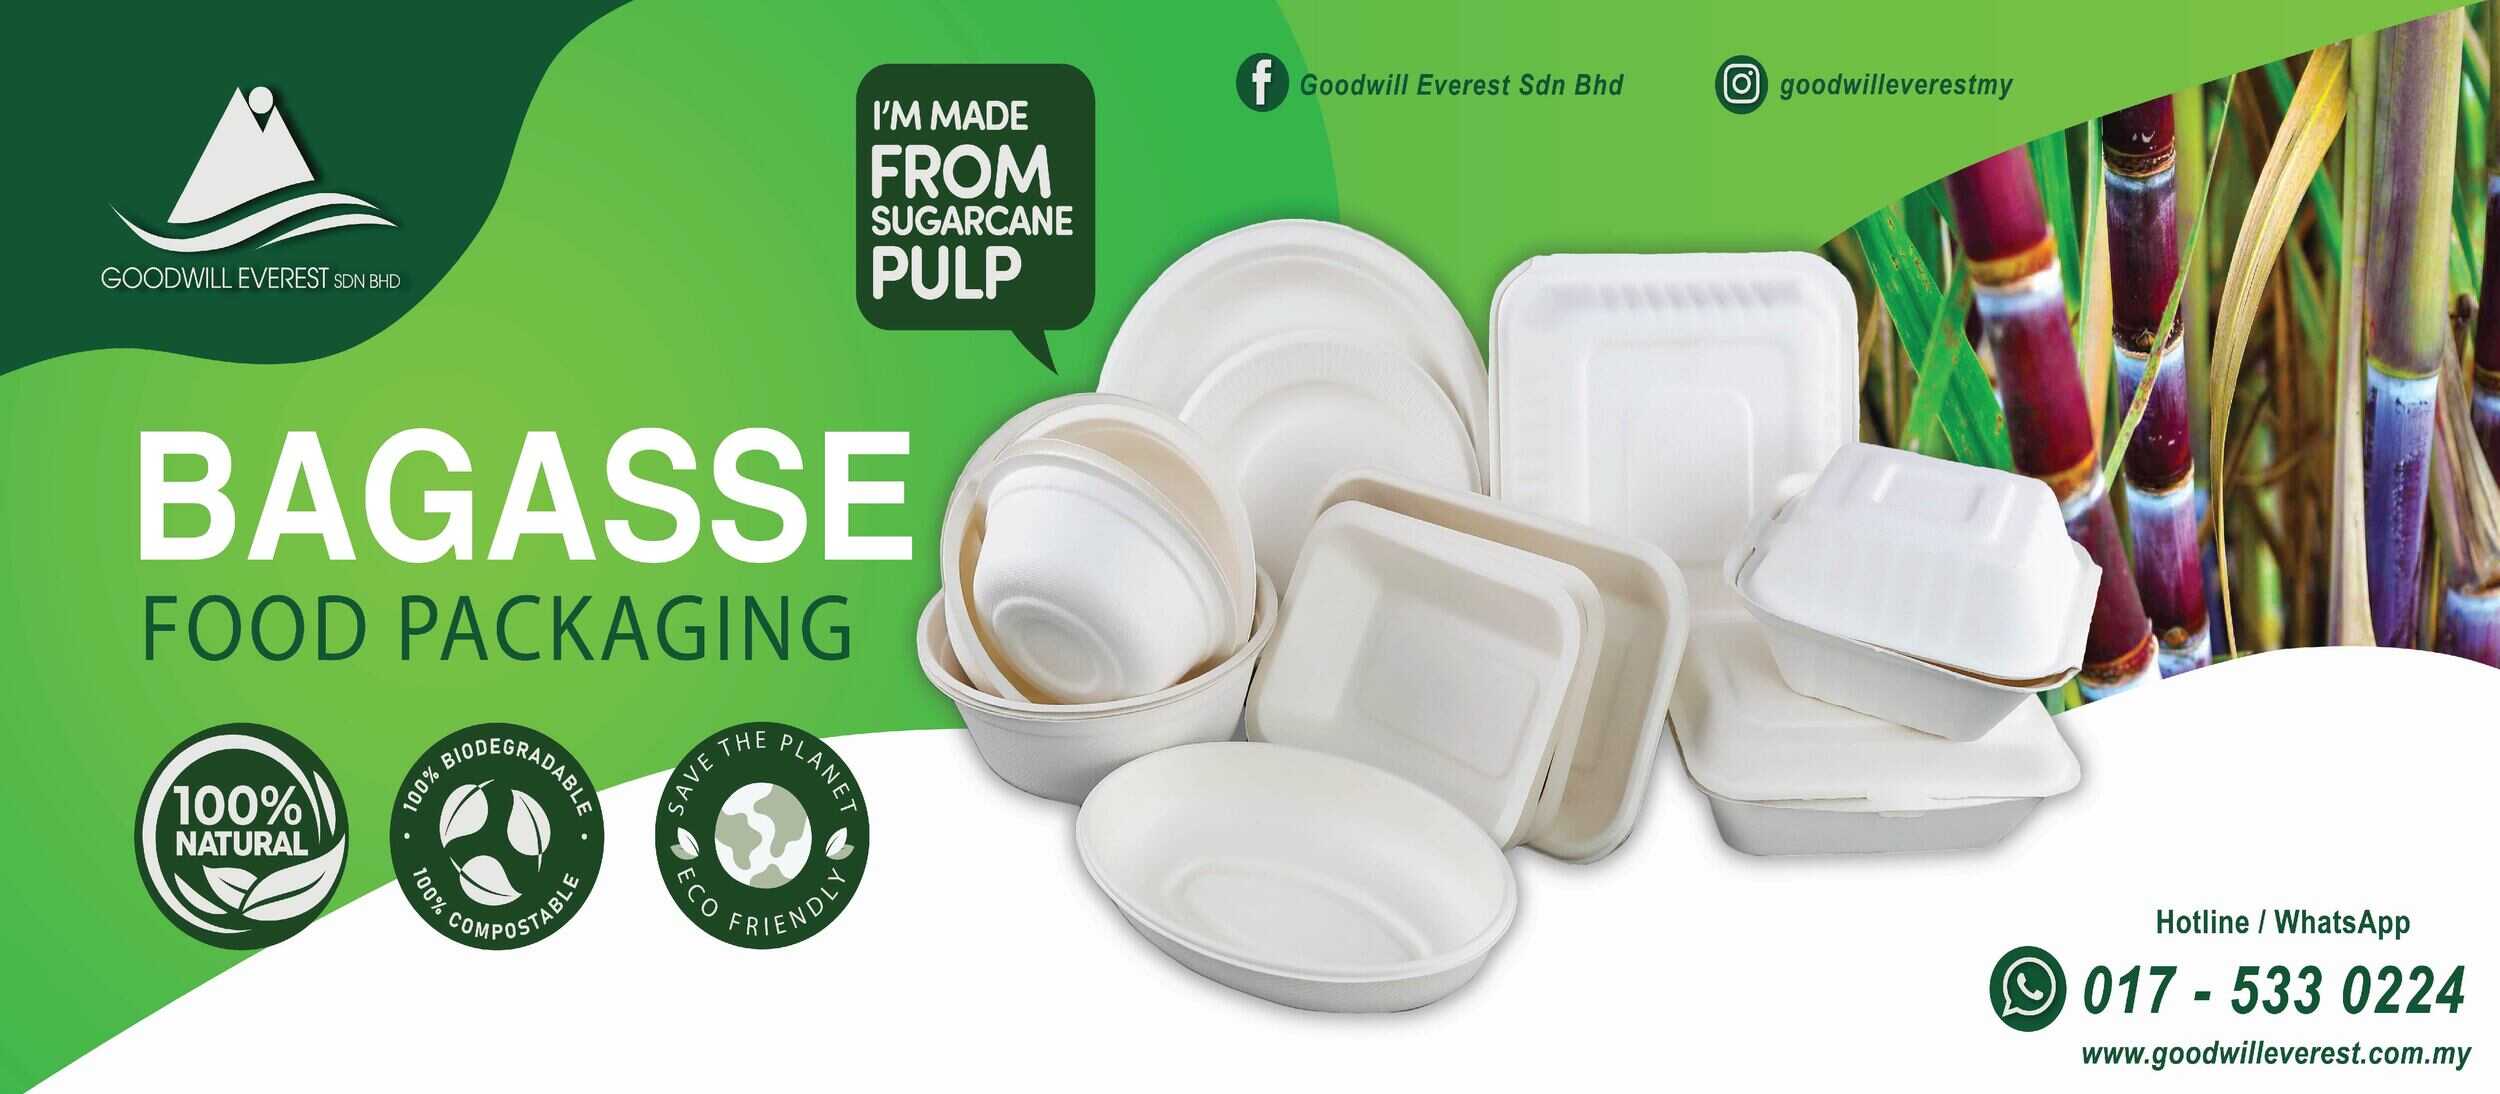 50pcs Disposable Biodegradable Plate Malaysia, Selangor, Kuala